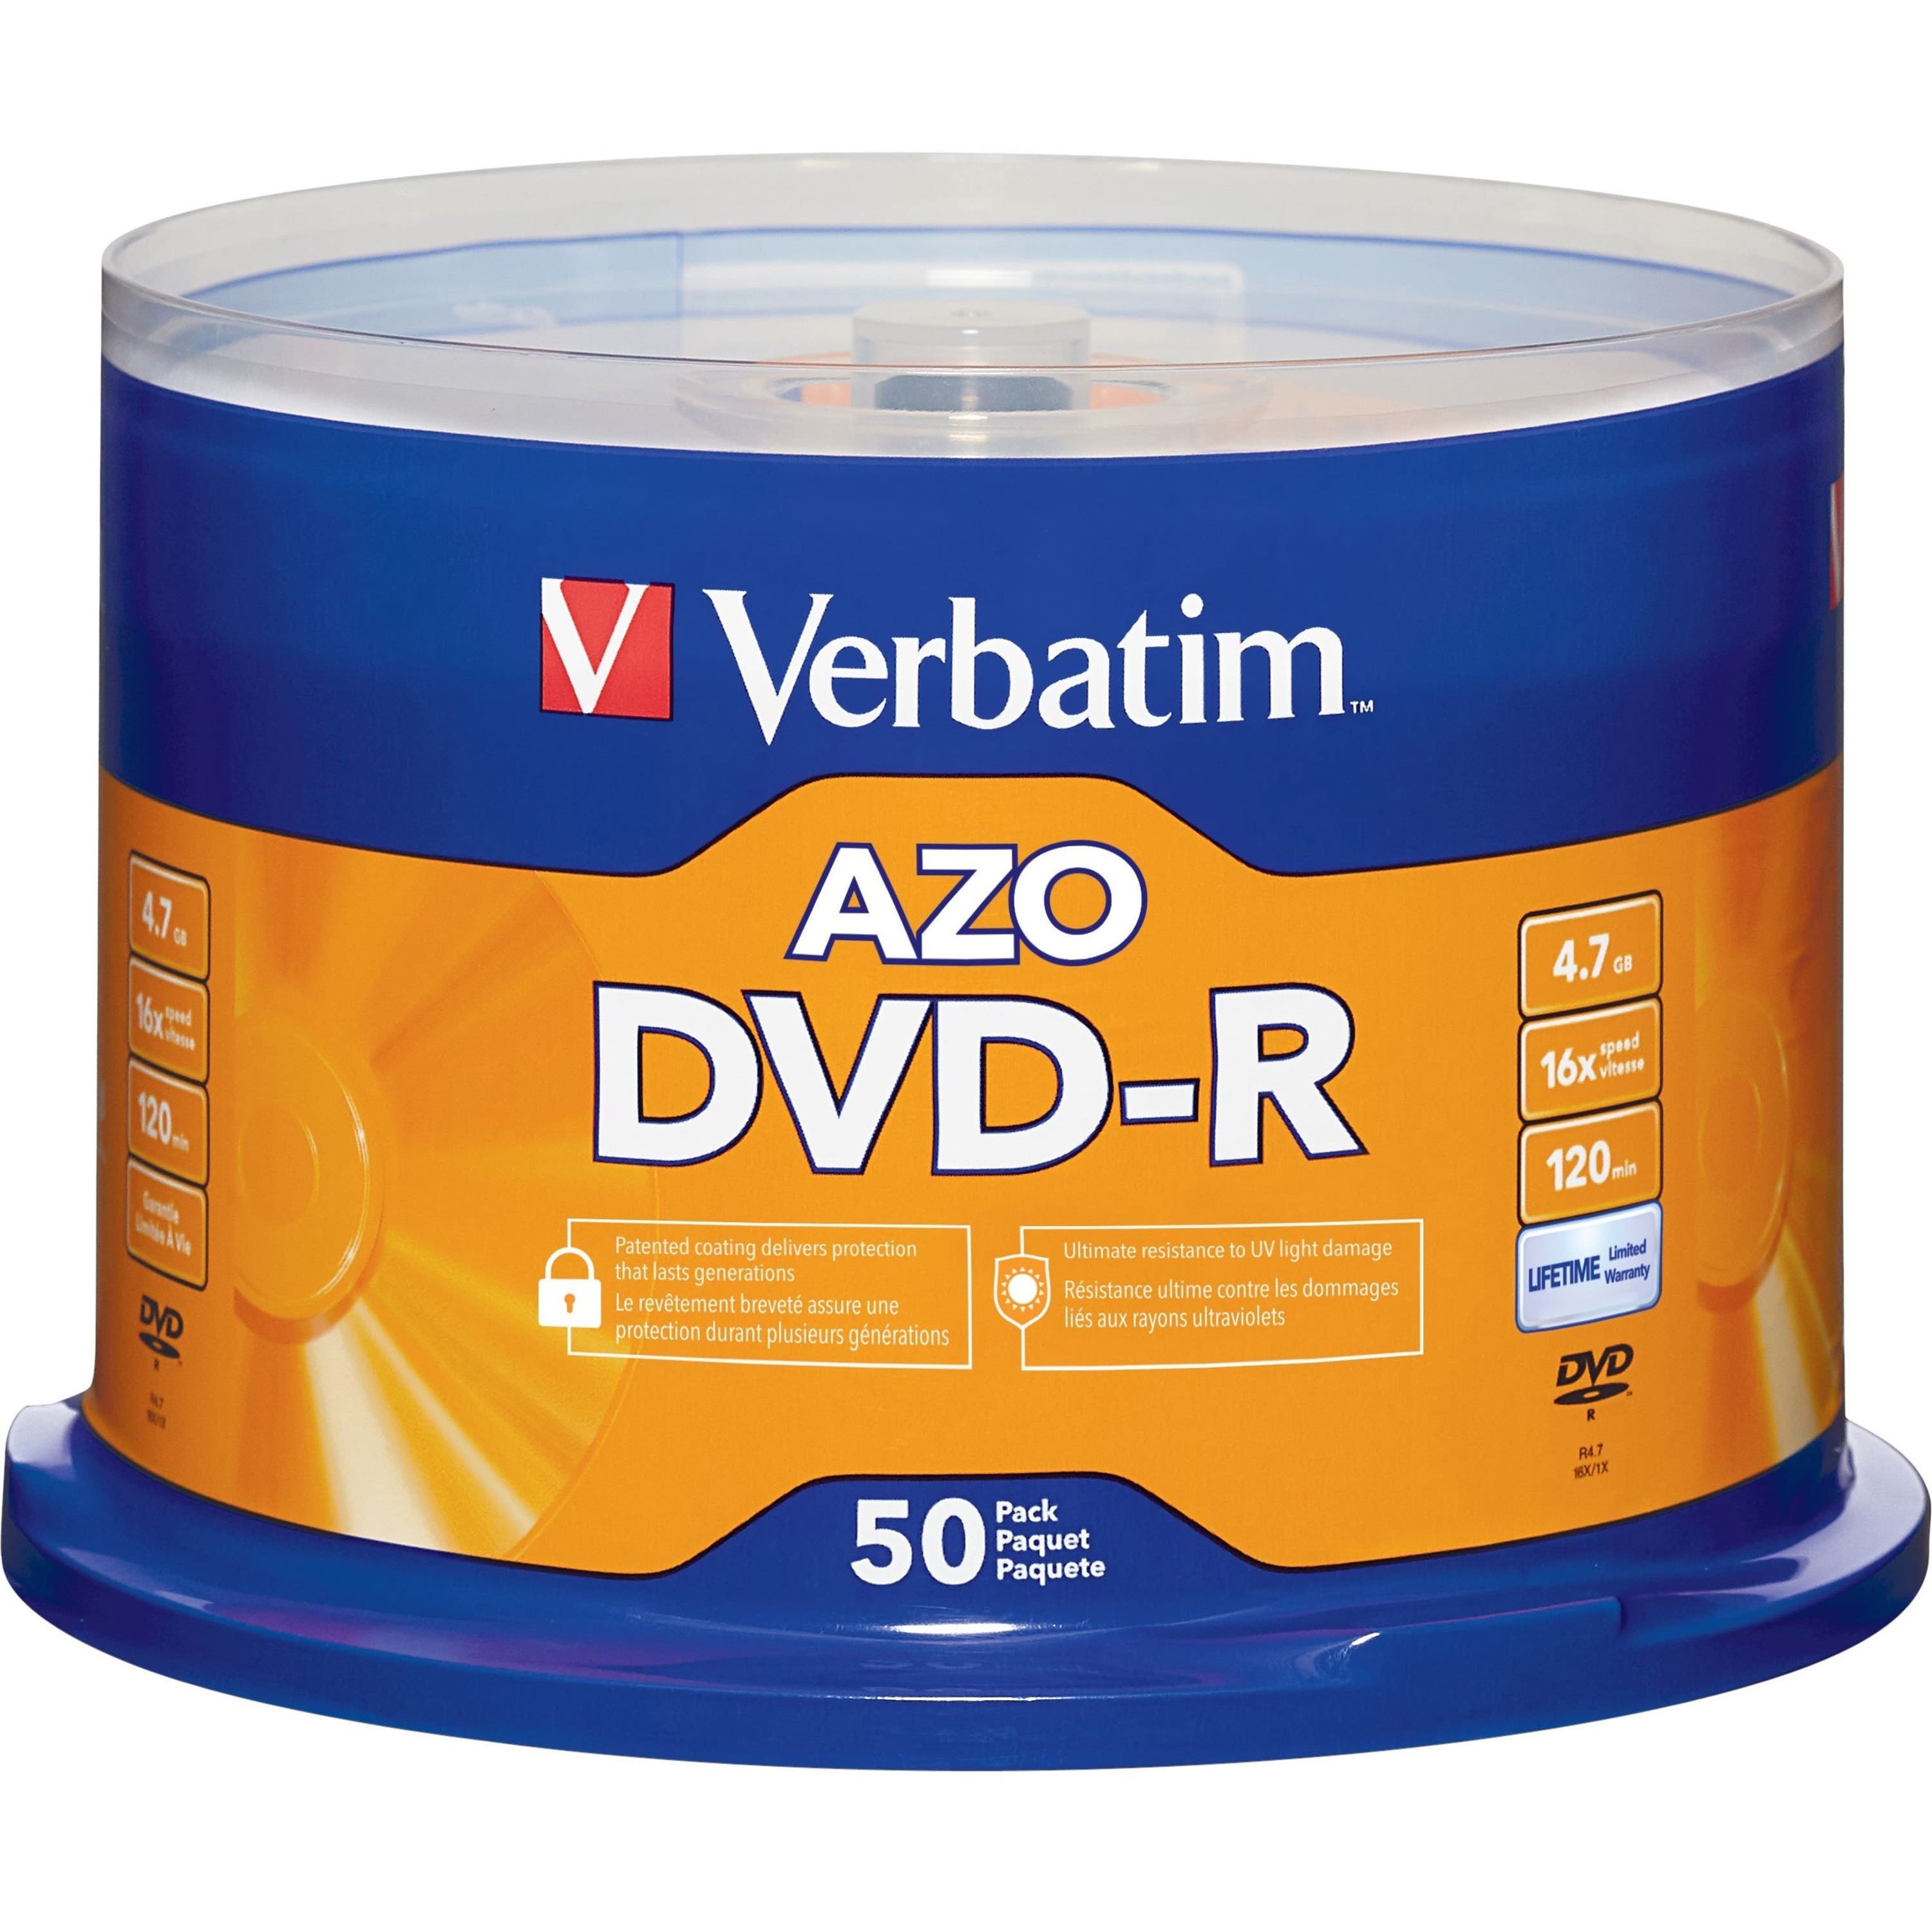 SKILCRAFT Branded Attribute DVD RW Media Discs Pack Of 5 Discs